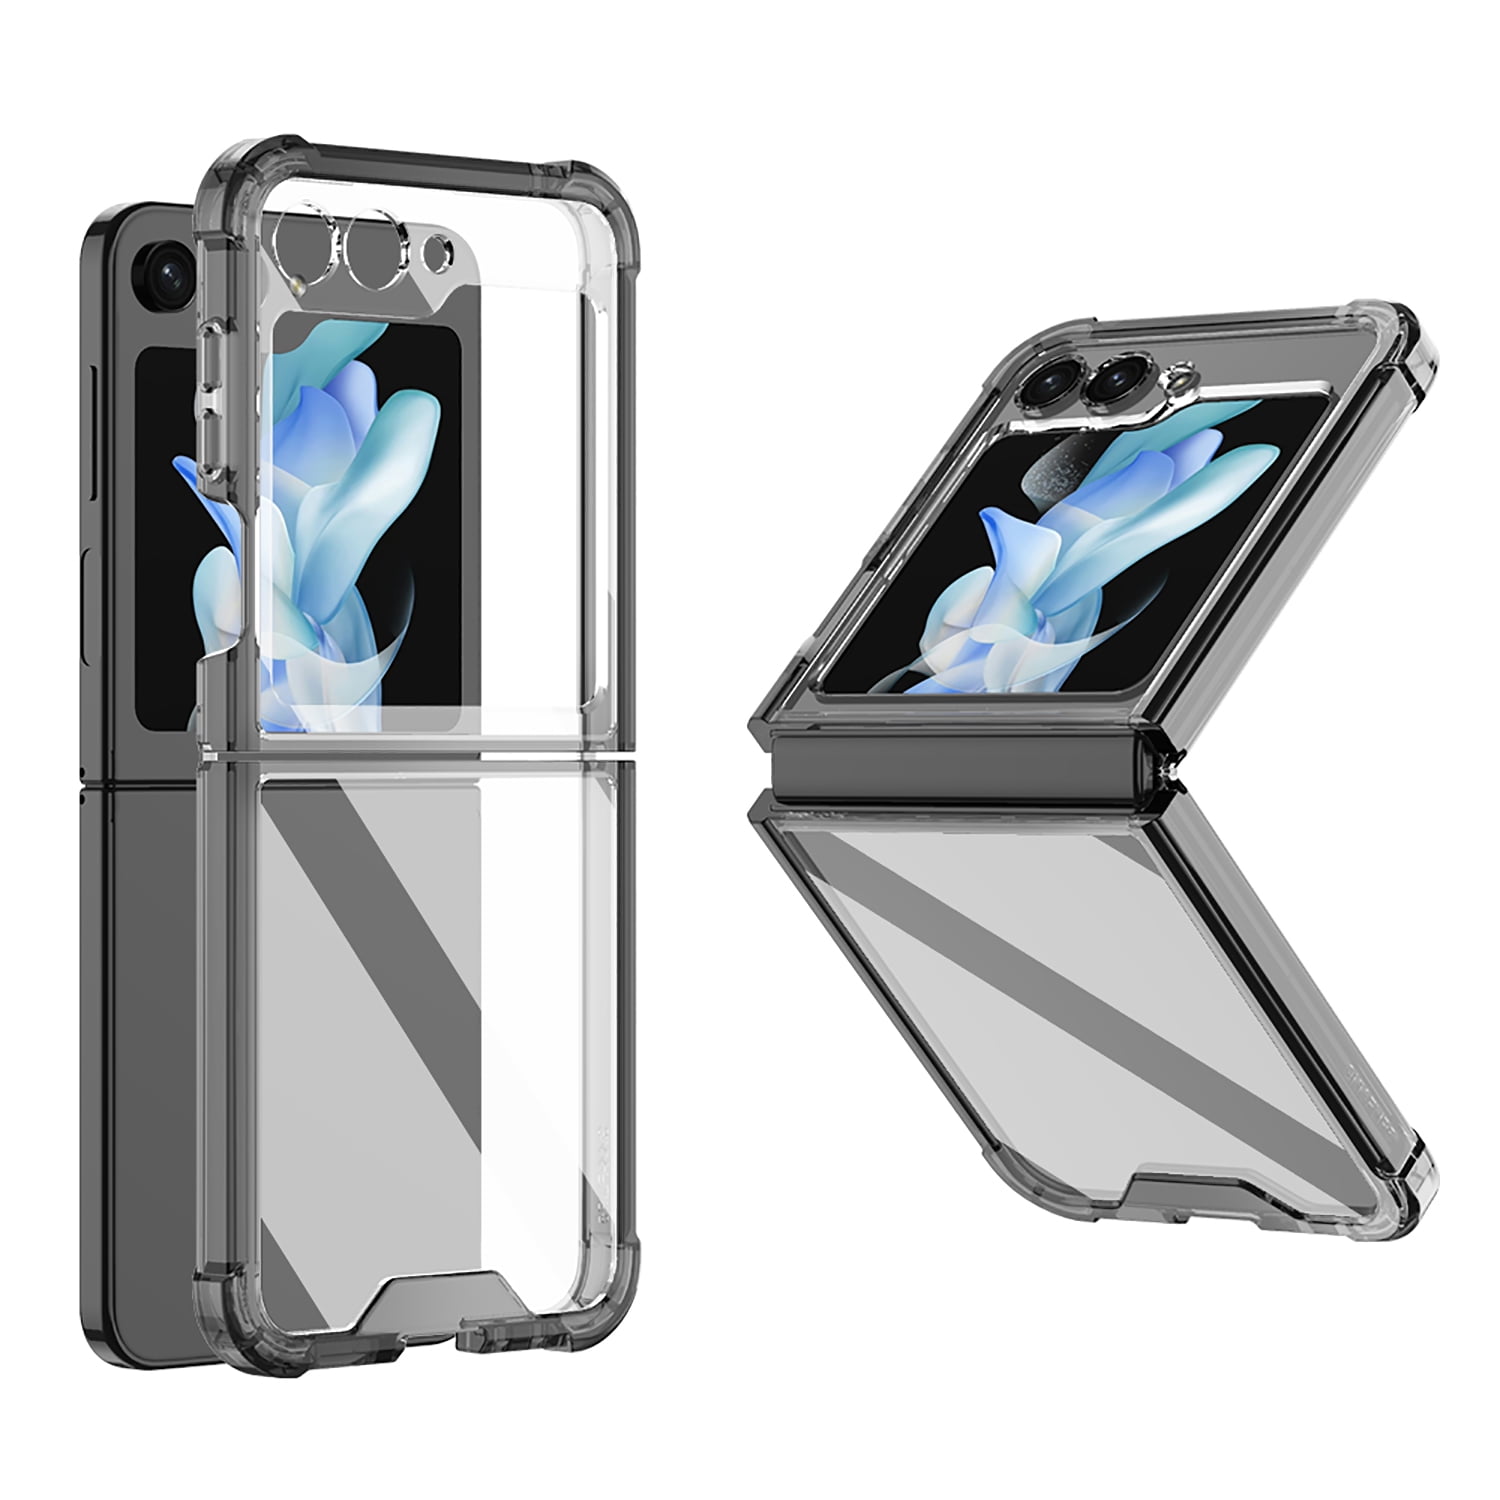 Funda for Samsung Galaxy Z Flip 5 Case Clear Transparent Hard Cover for  Samsung Z Flip 3 4 5 Case Ultra Thin PC Protection Capa